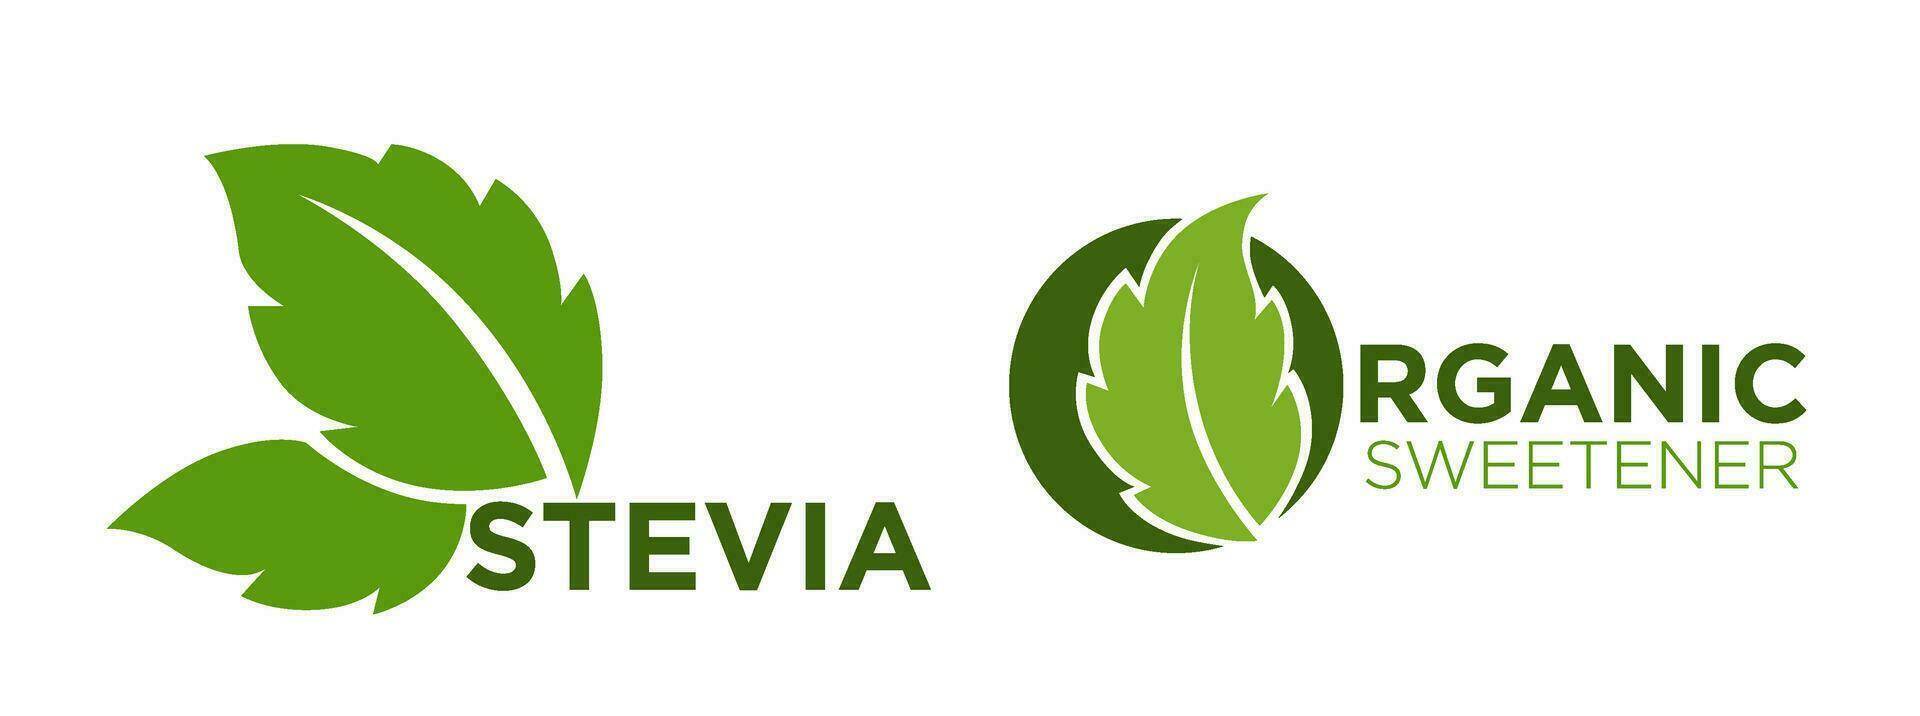 stevia organisk sötningsmedel, löv ekologiskt vektor